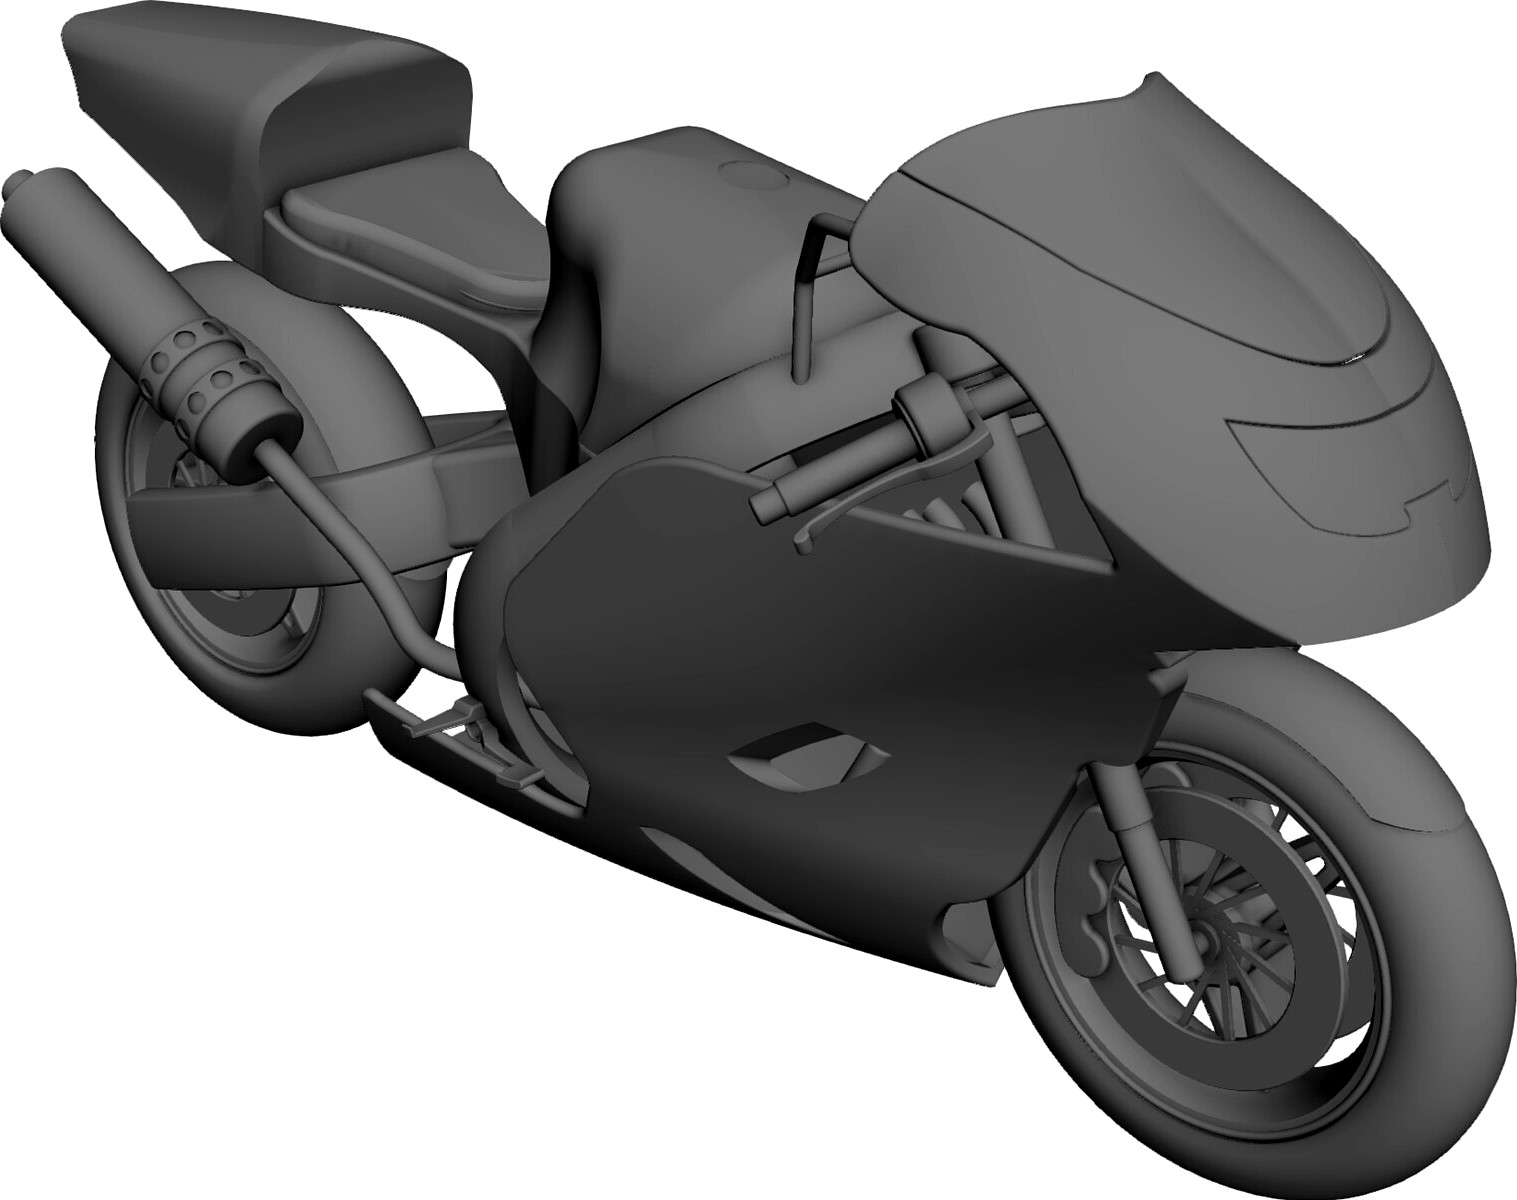 Honda CBR600RR Sport Bike 3D CAD Model